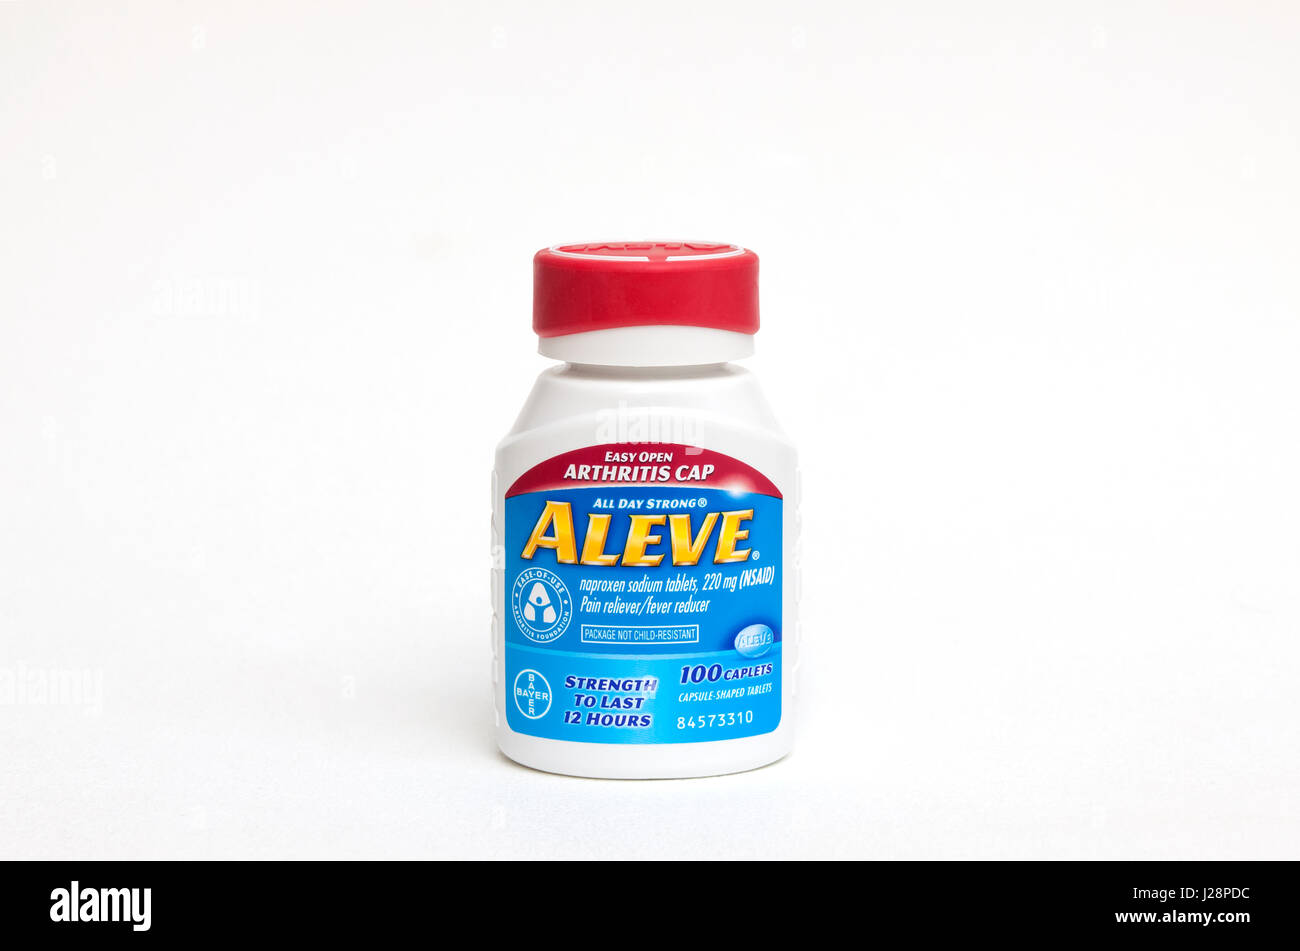 Aleve (naproxen sodium), popular name brand, bottle with easy open arthritis cap. Stock Photo